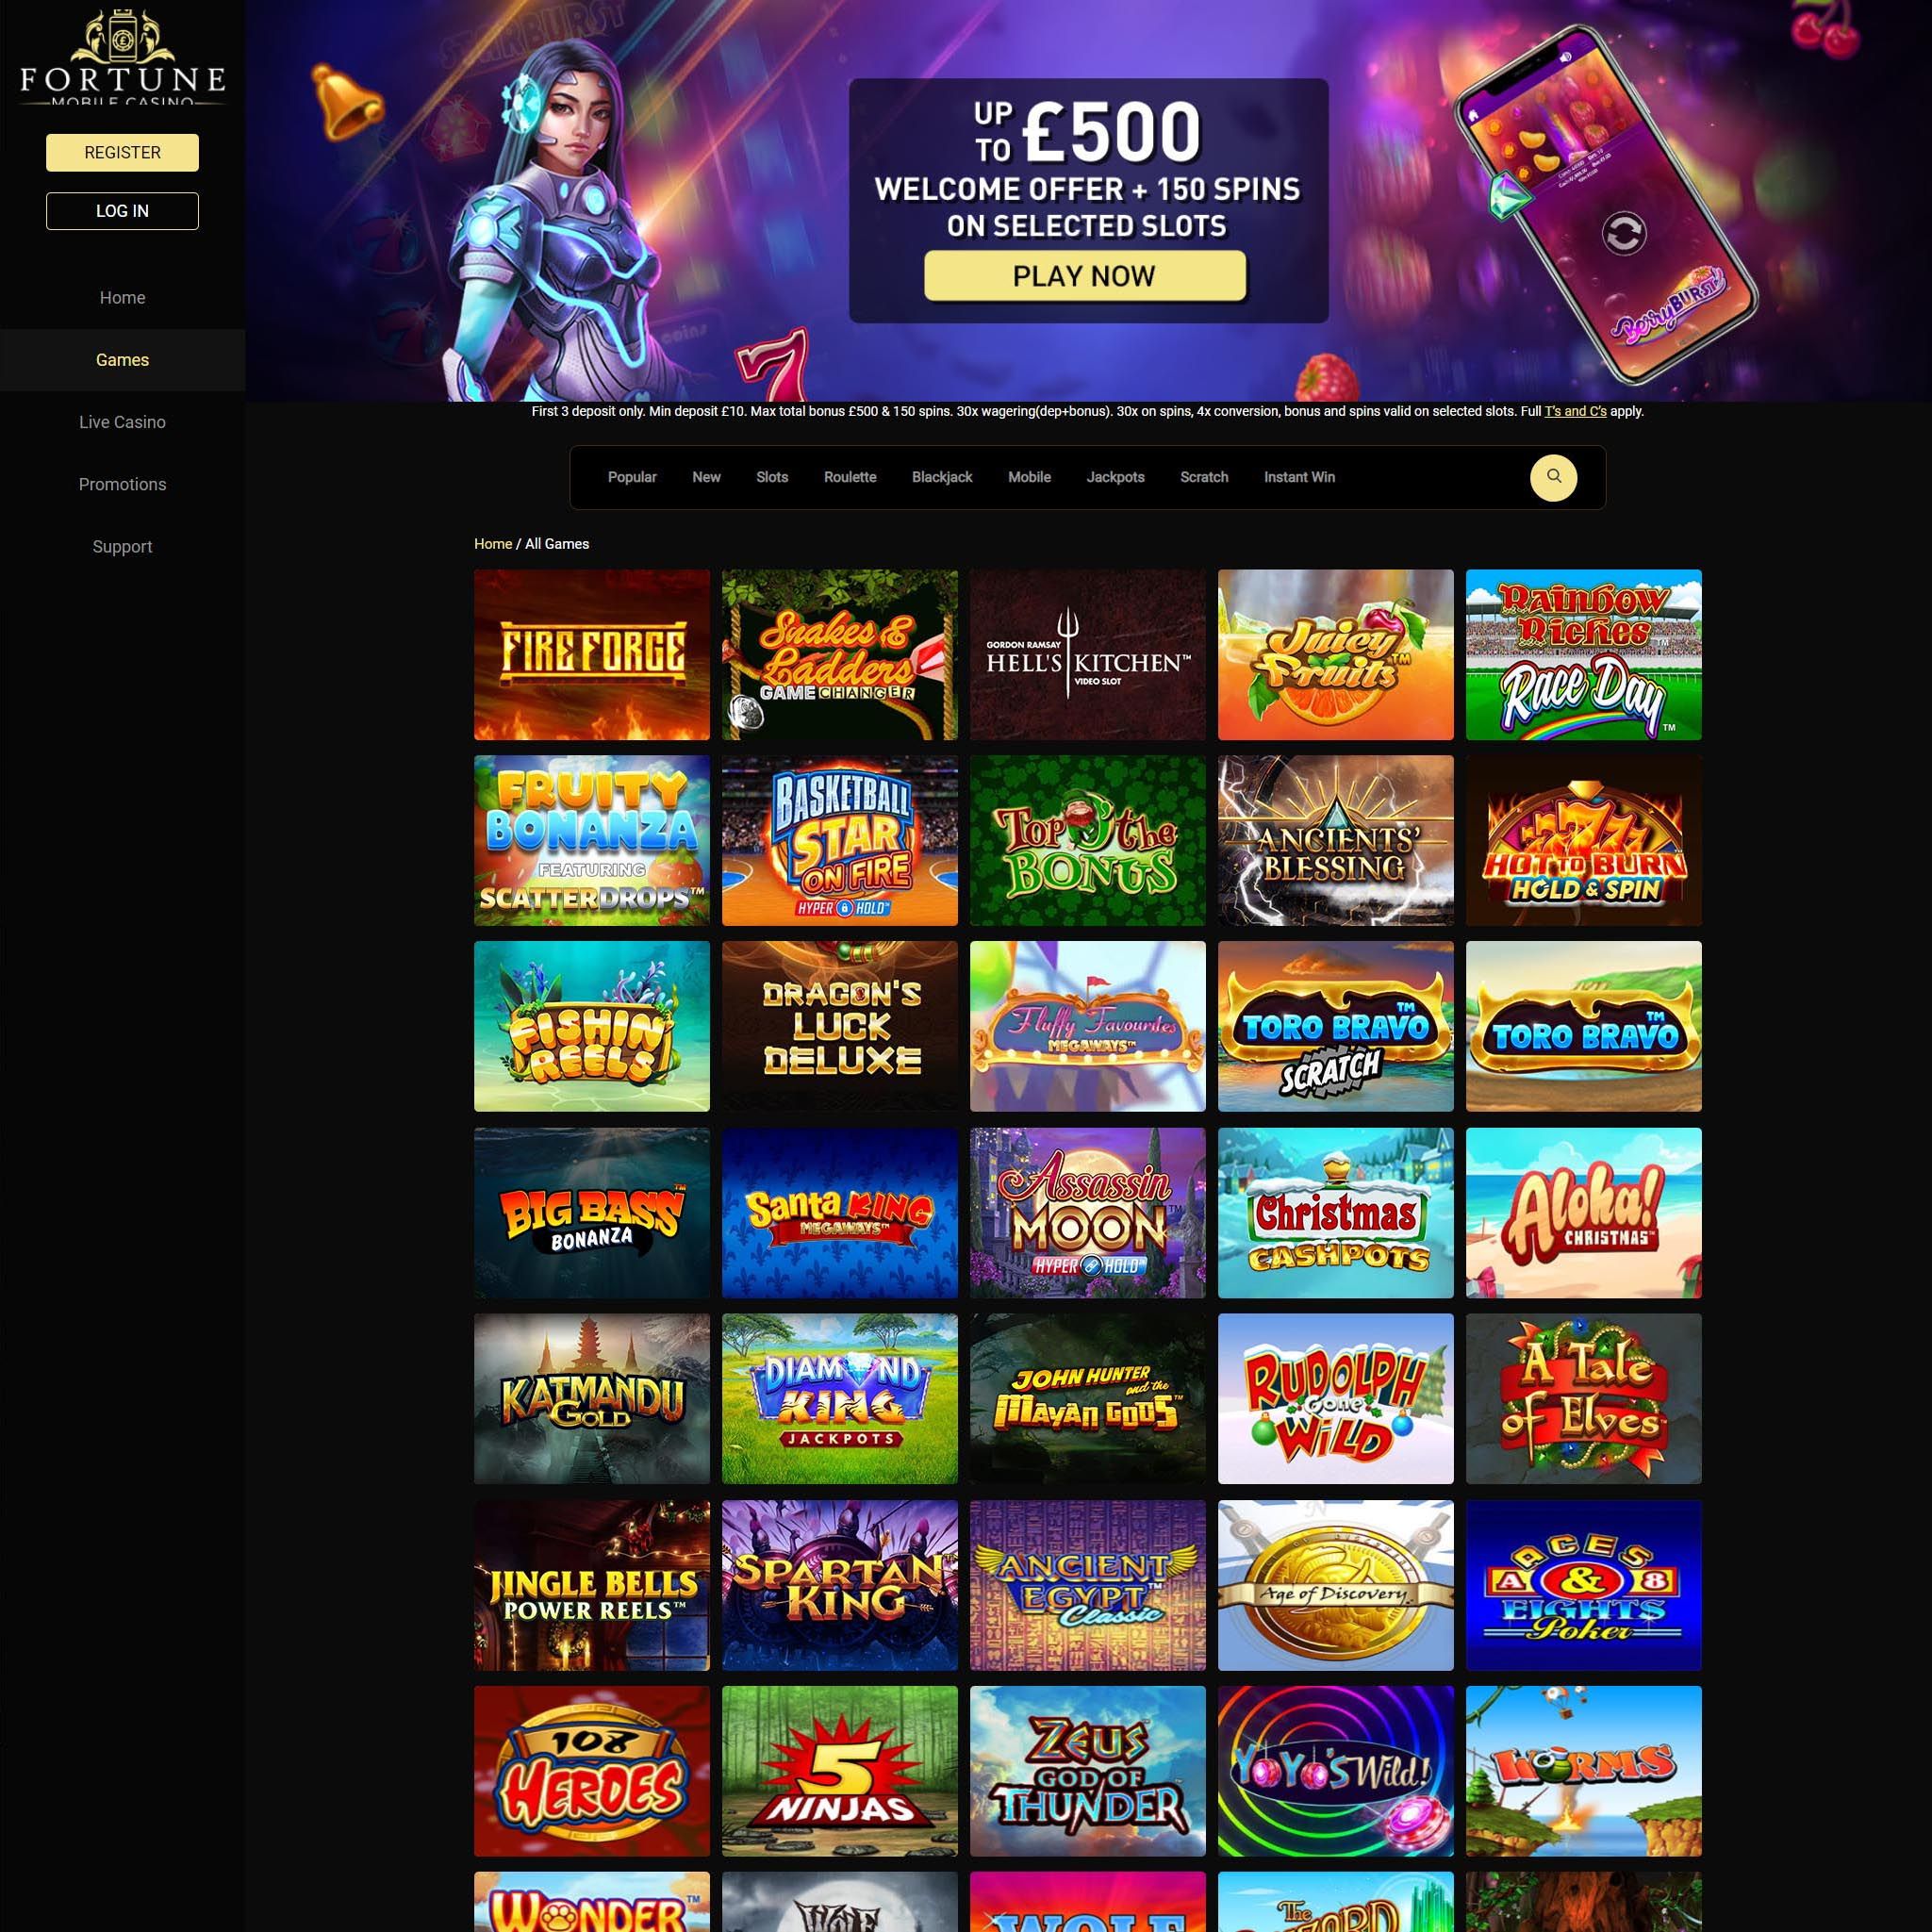 Fortune Mobile Casino full games catalogue